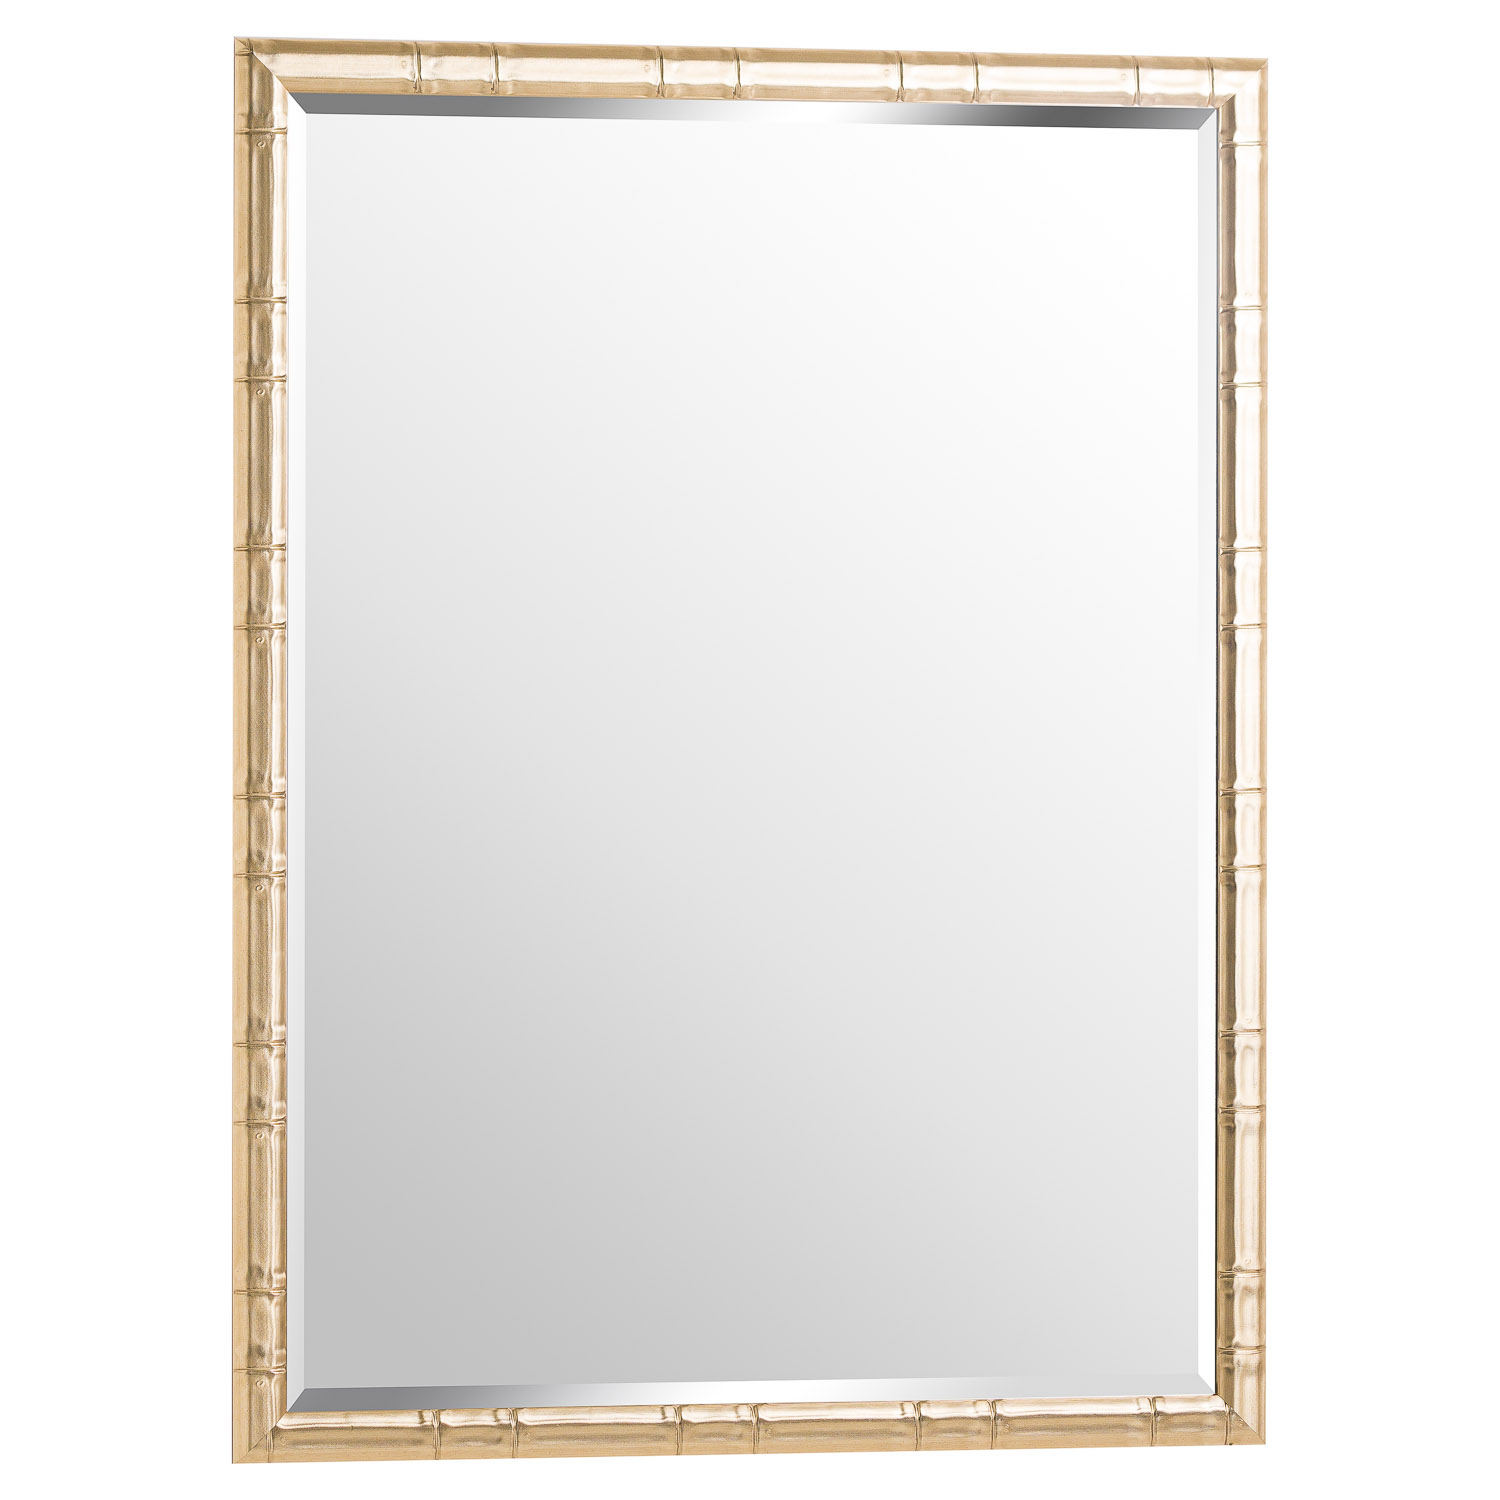 Soho Large Brass Framed Mirror - Image 1